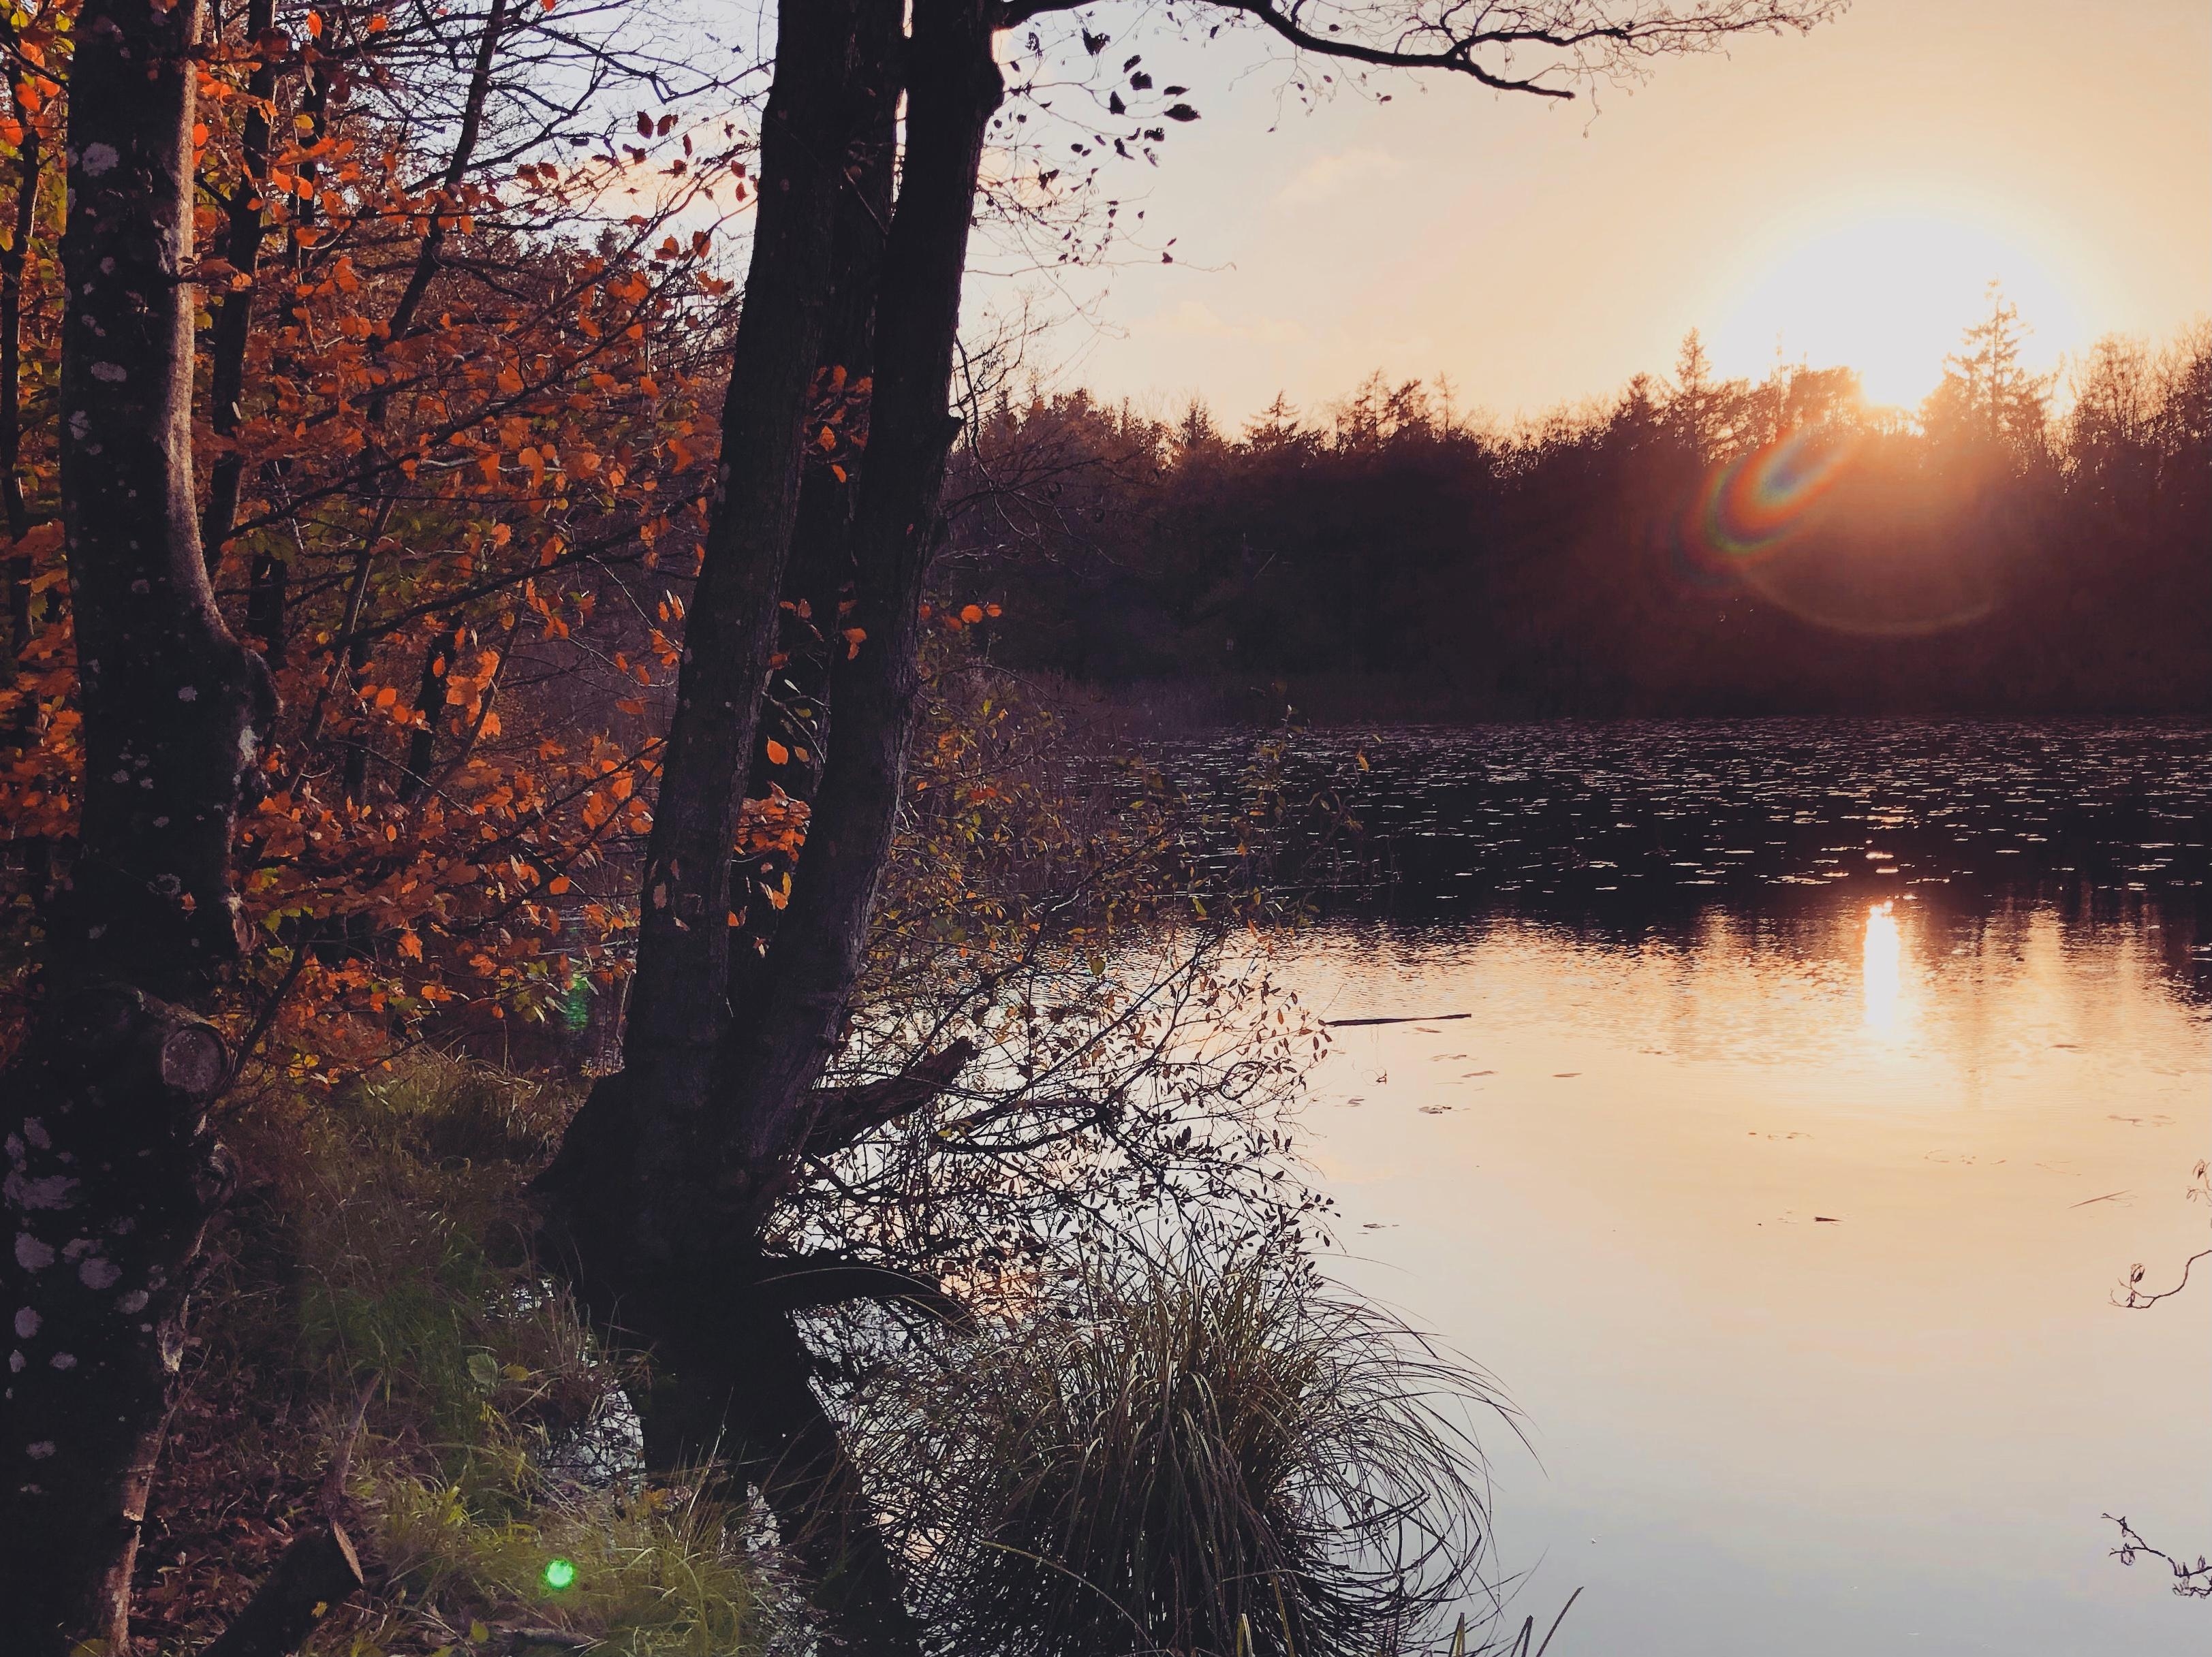 Autumn sunset.
#nature #tranquility #breathinbreathout